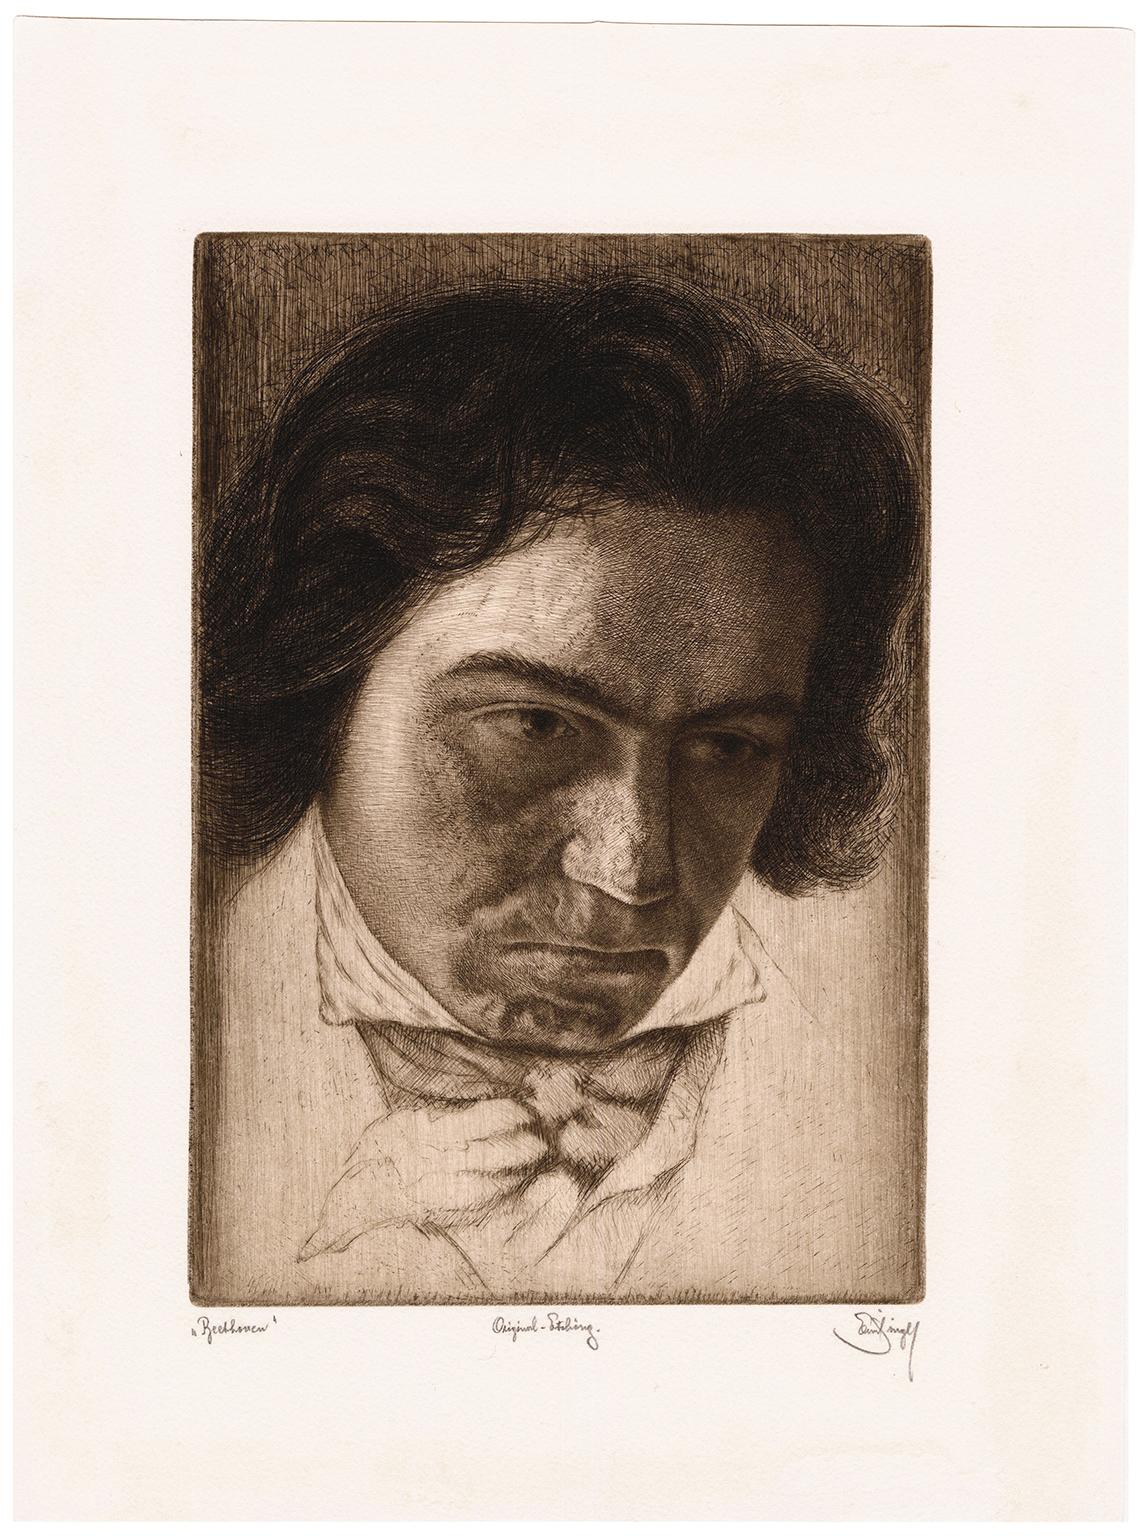 'Beethoven' - c 1920 etching portrait - Print by Emil Singer